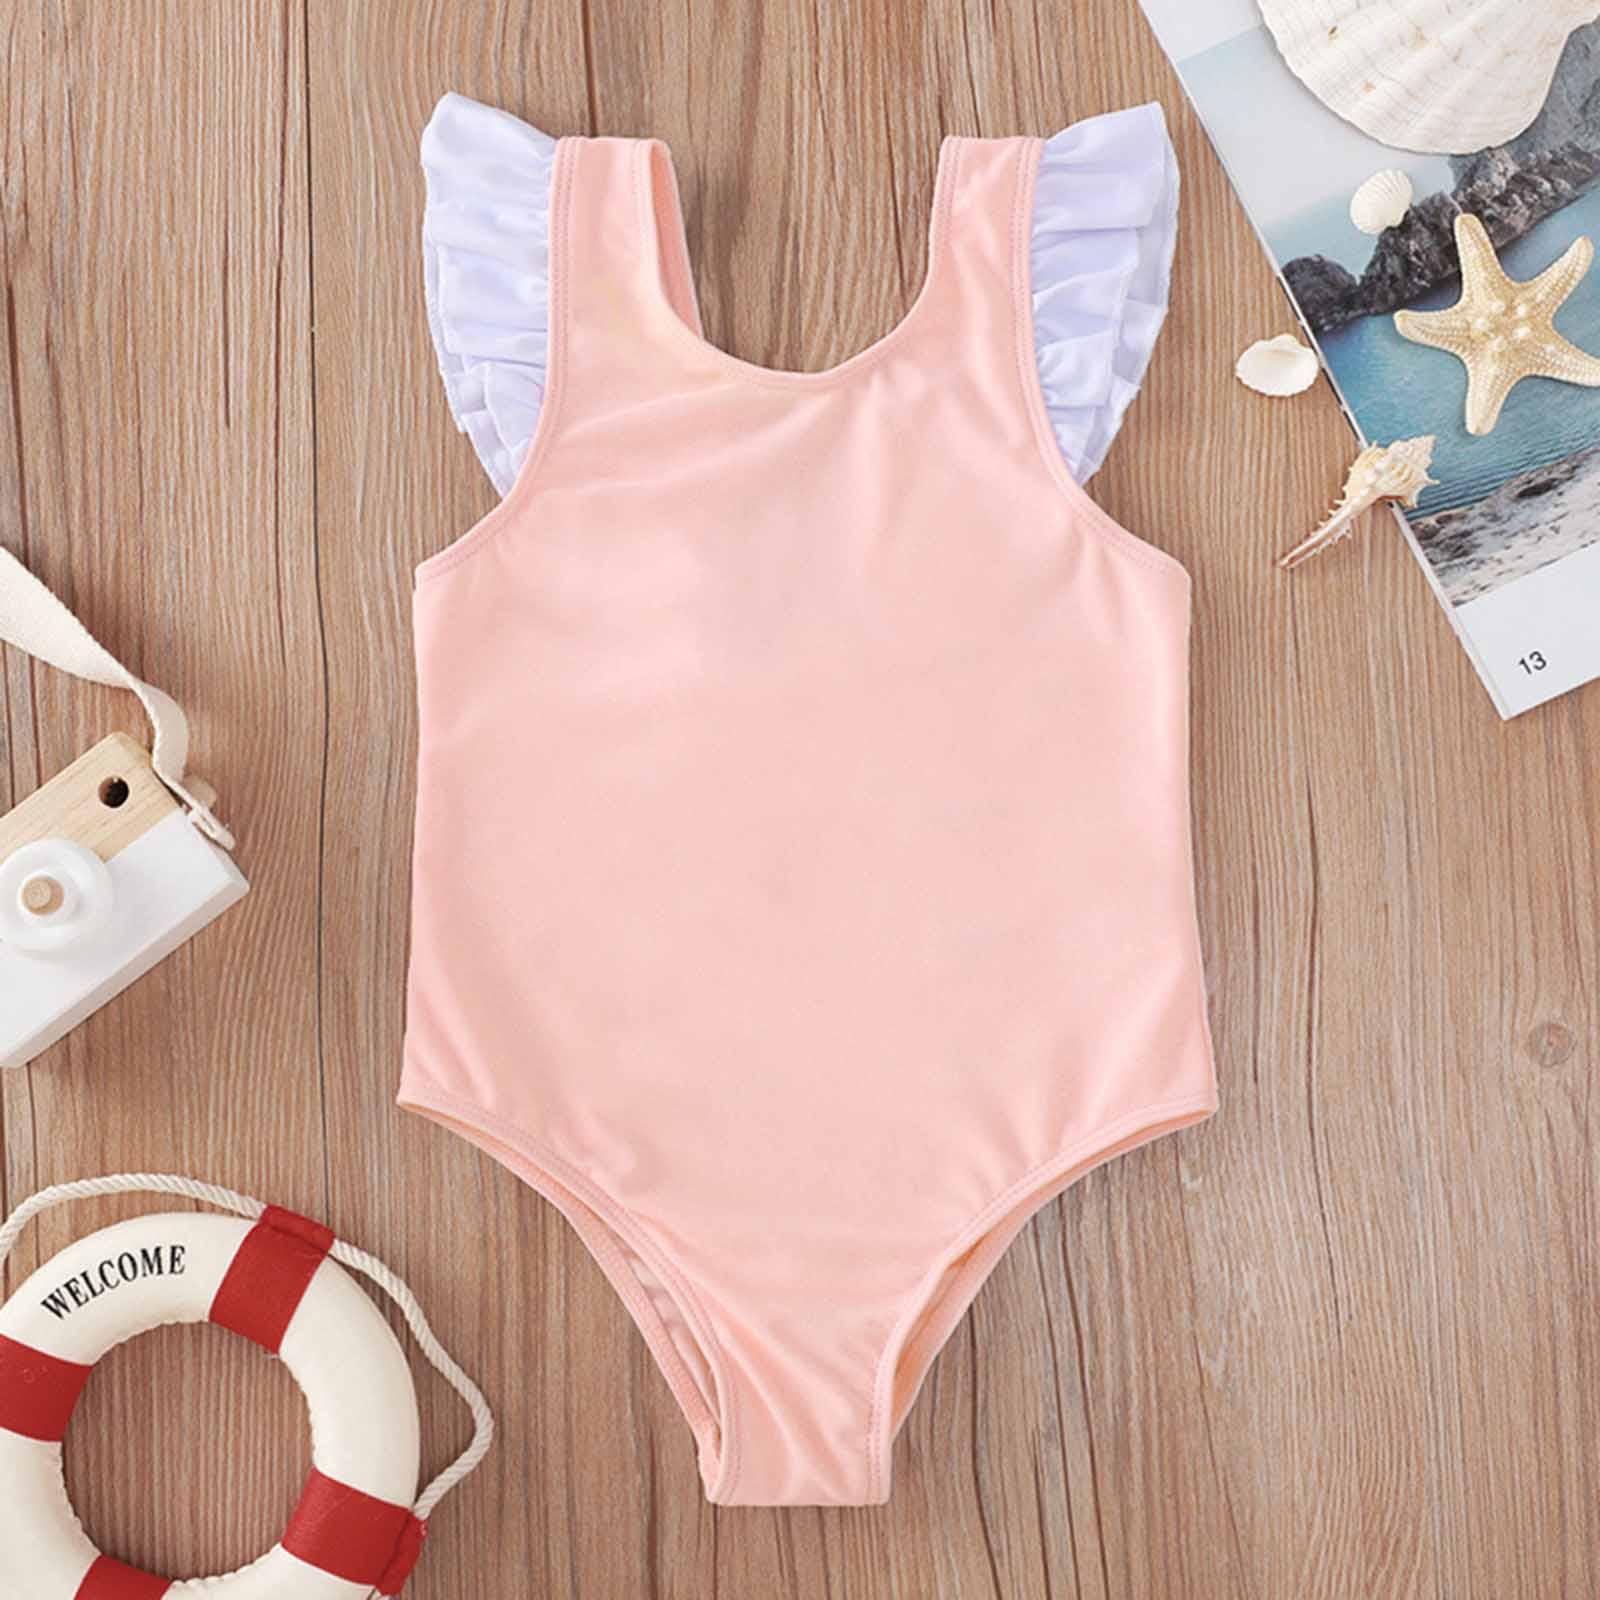 Winnerer Sun Toddler Baby Kids Girls Ruffles Solid One-Piece Beach Swimsuit Swimwear